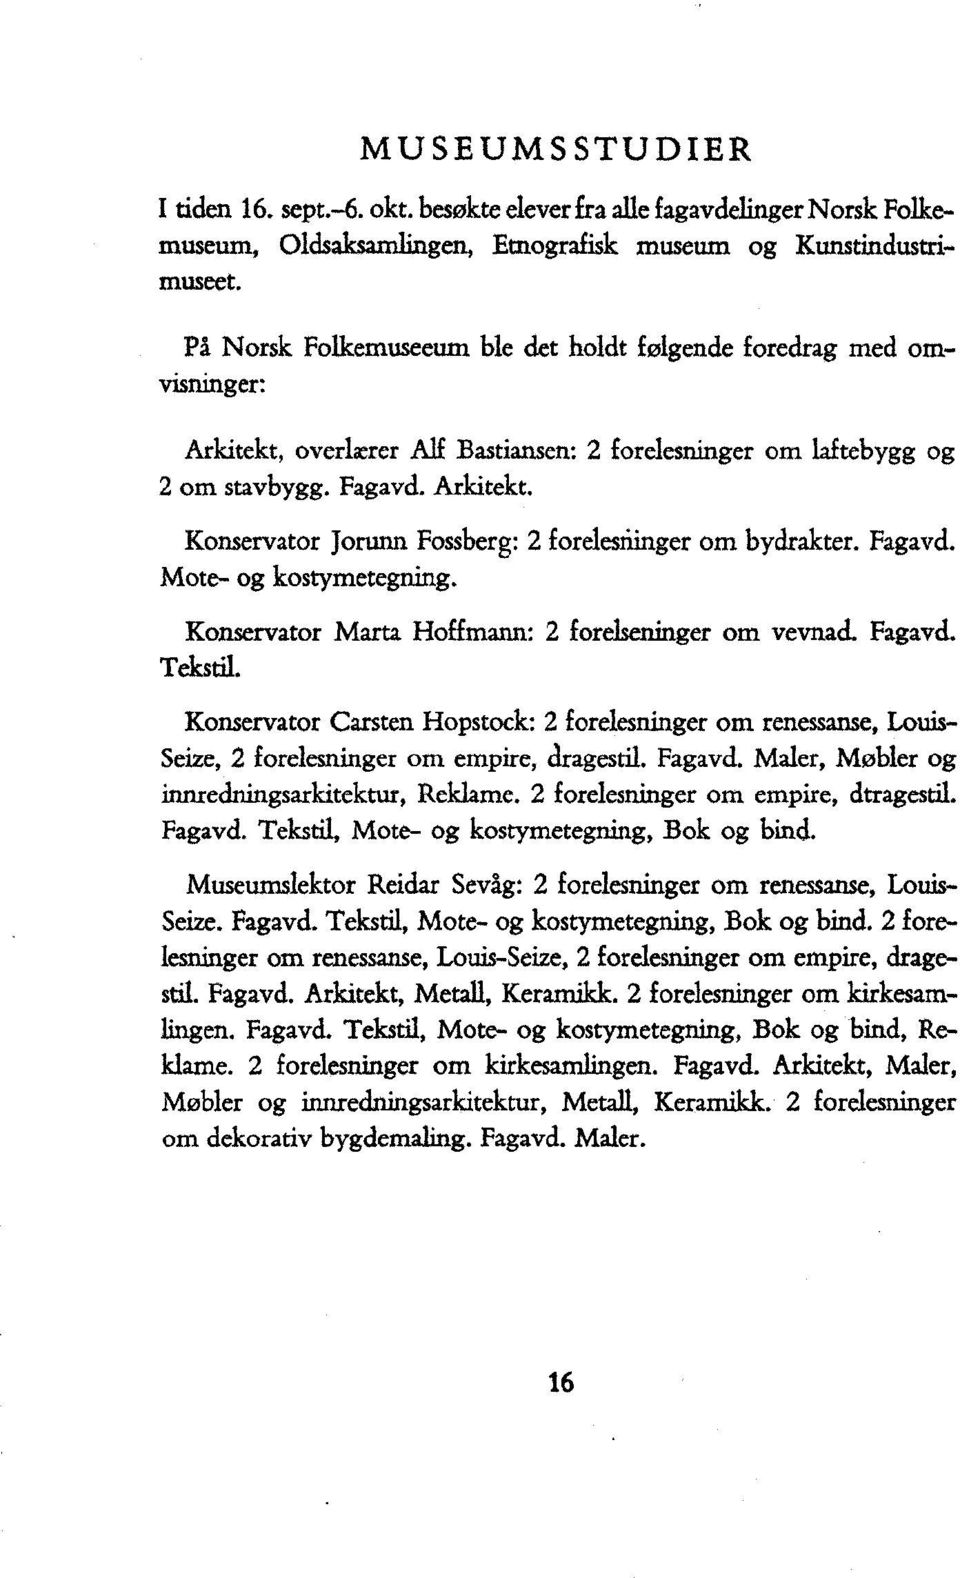 Konservator Marta Hoffmann: 2 forelseninger om vevnad. Fagavd. Tekstil.